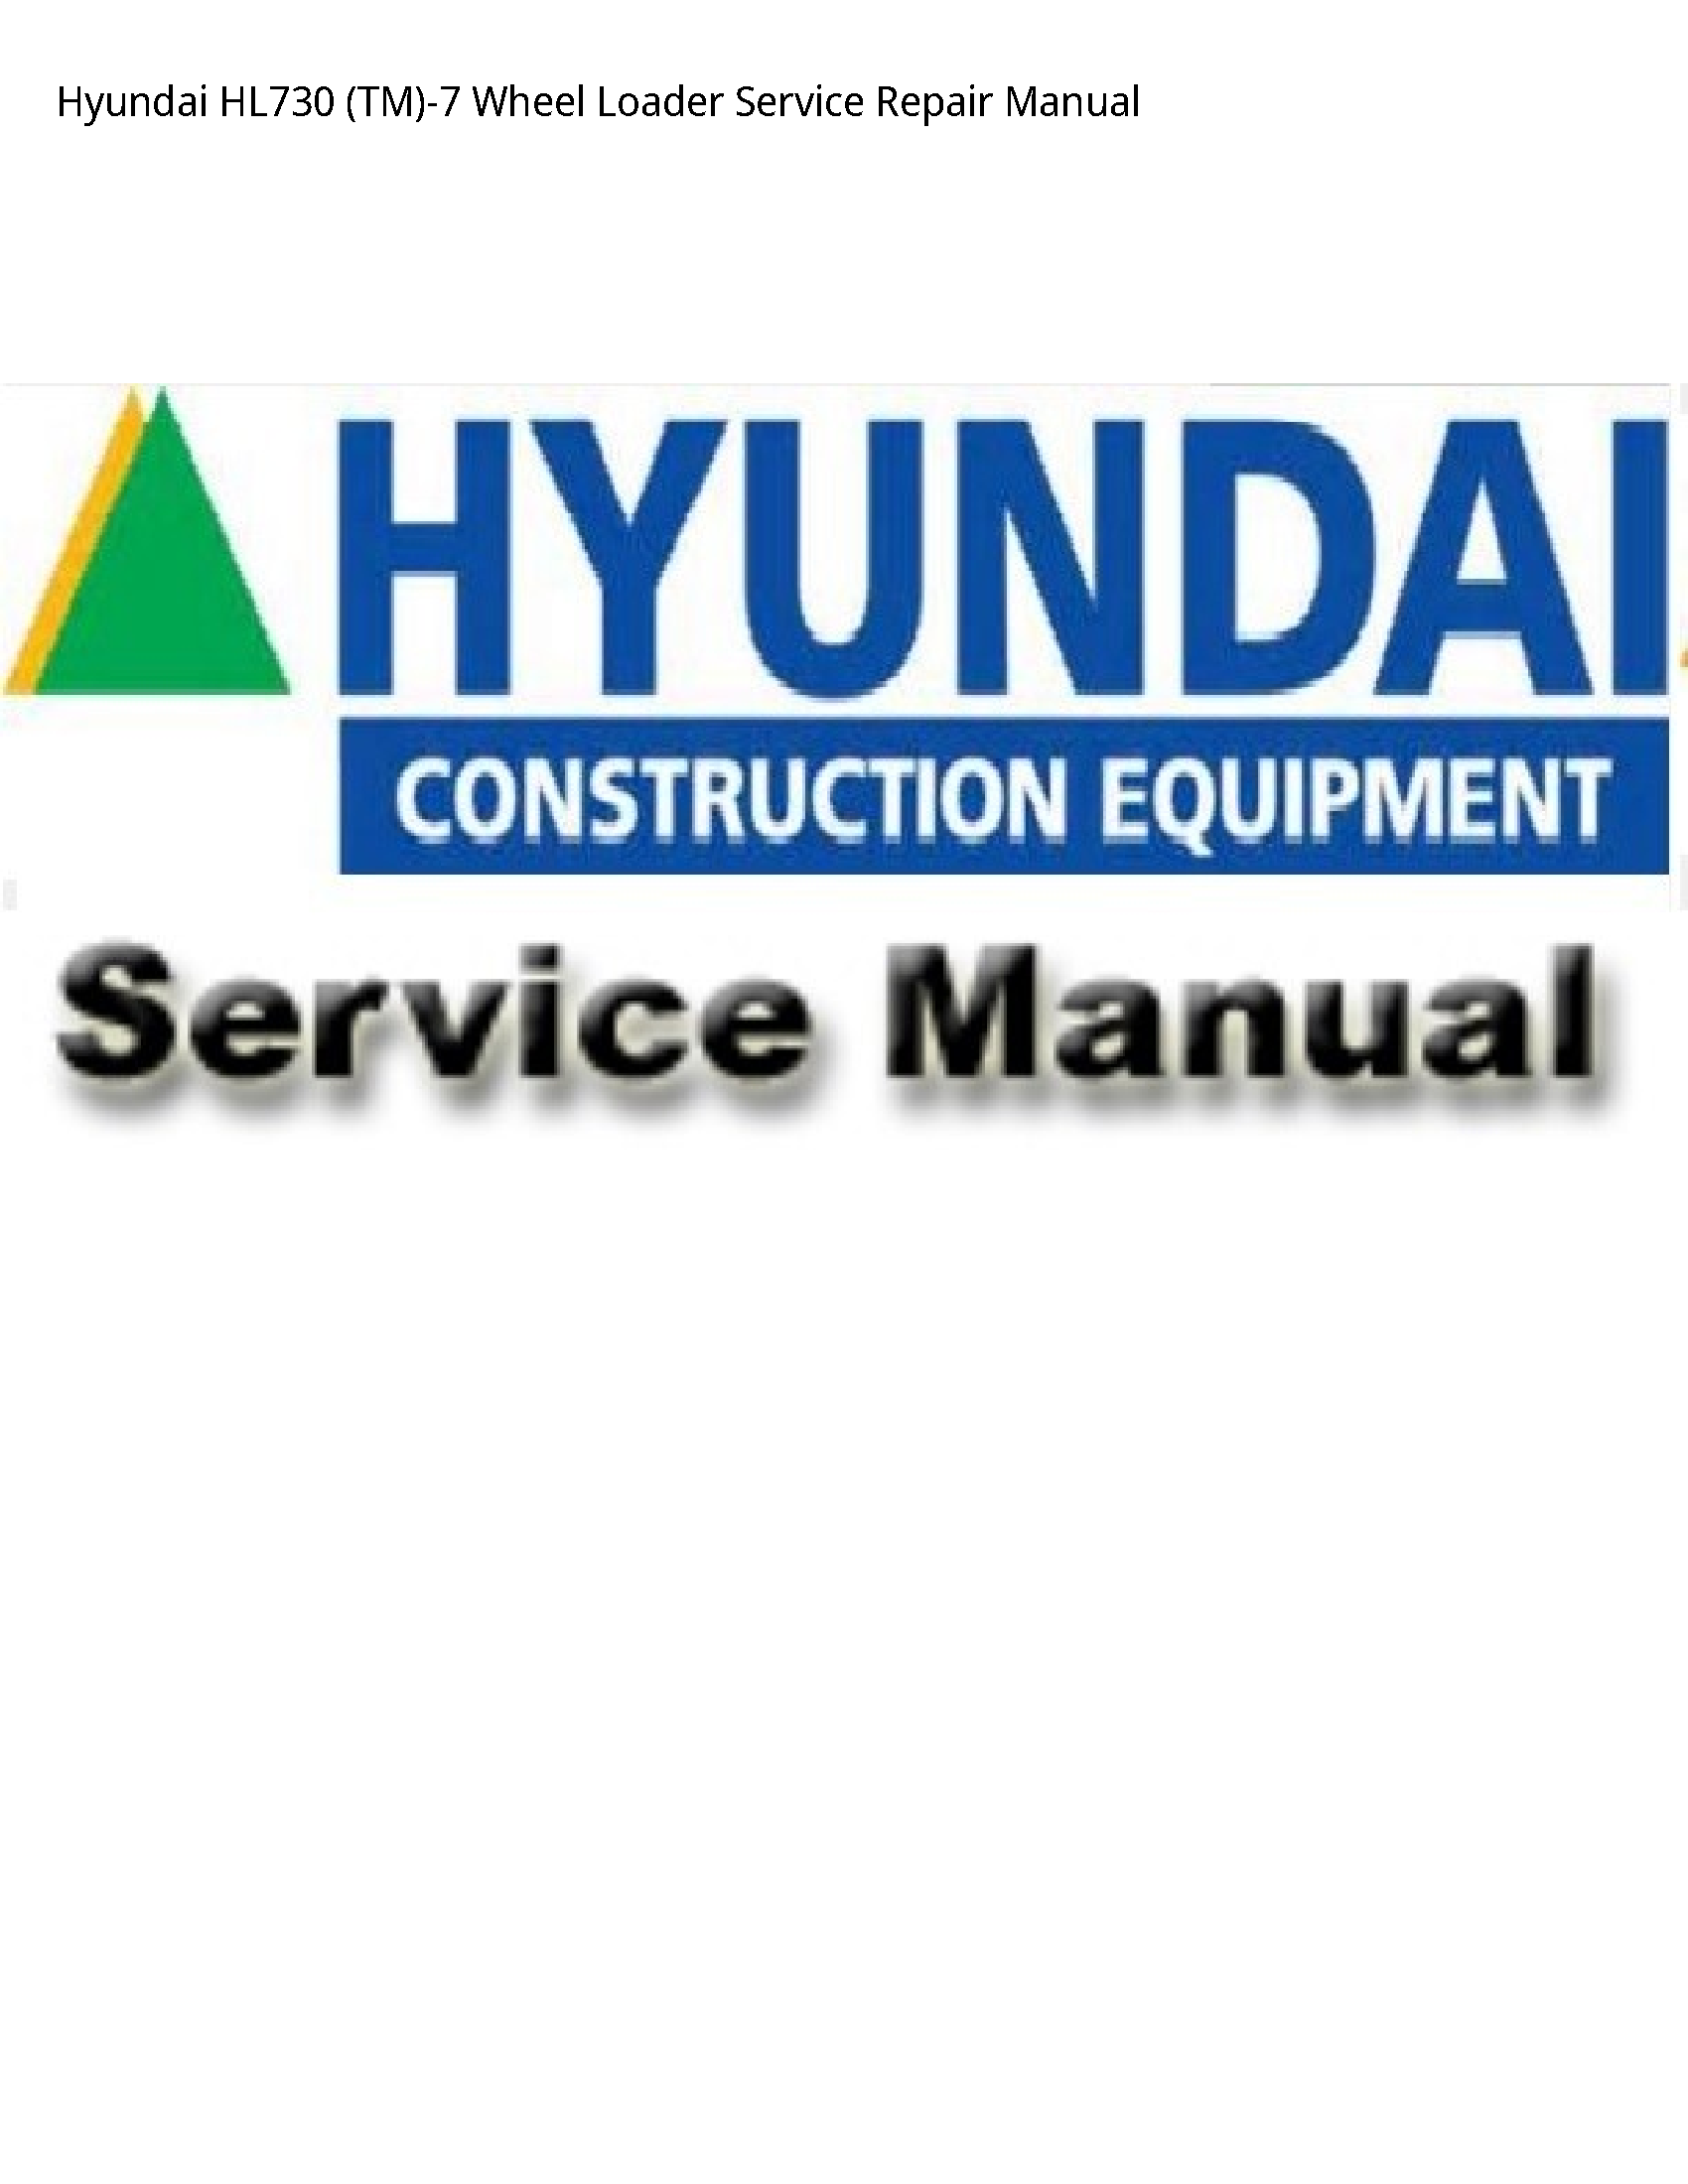 Hyundai HL730 Wheel Loader manual